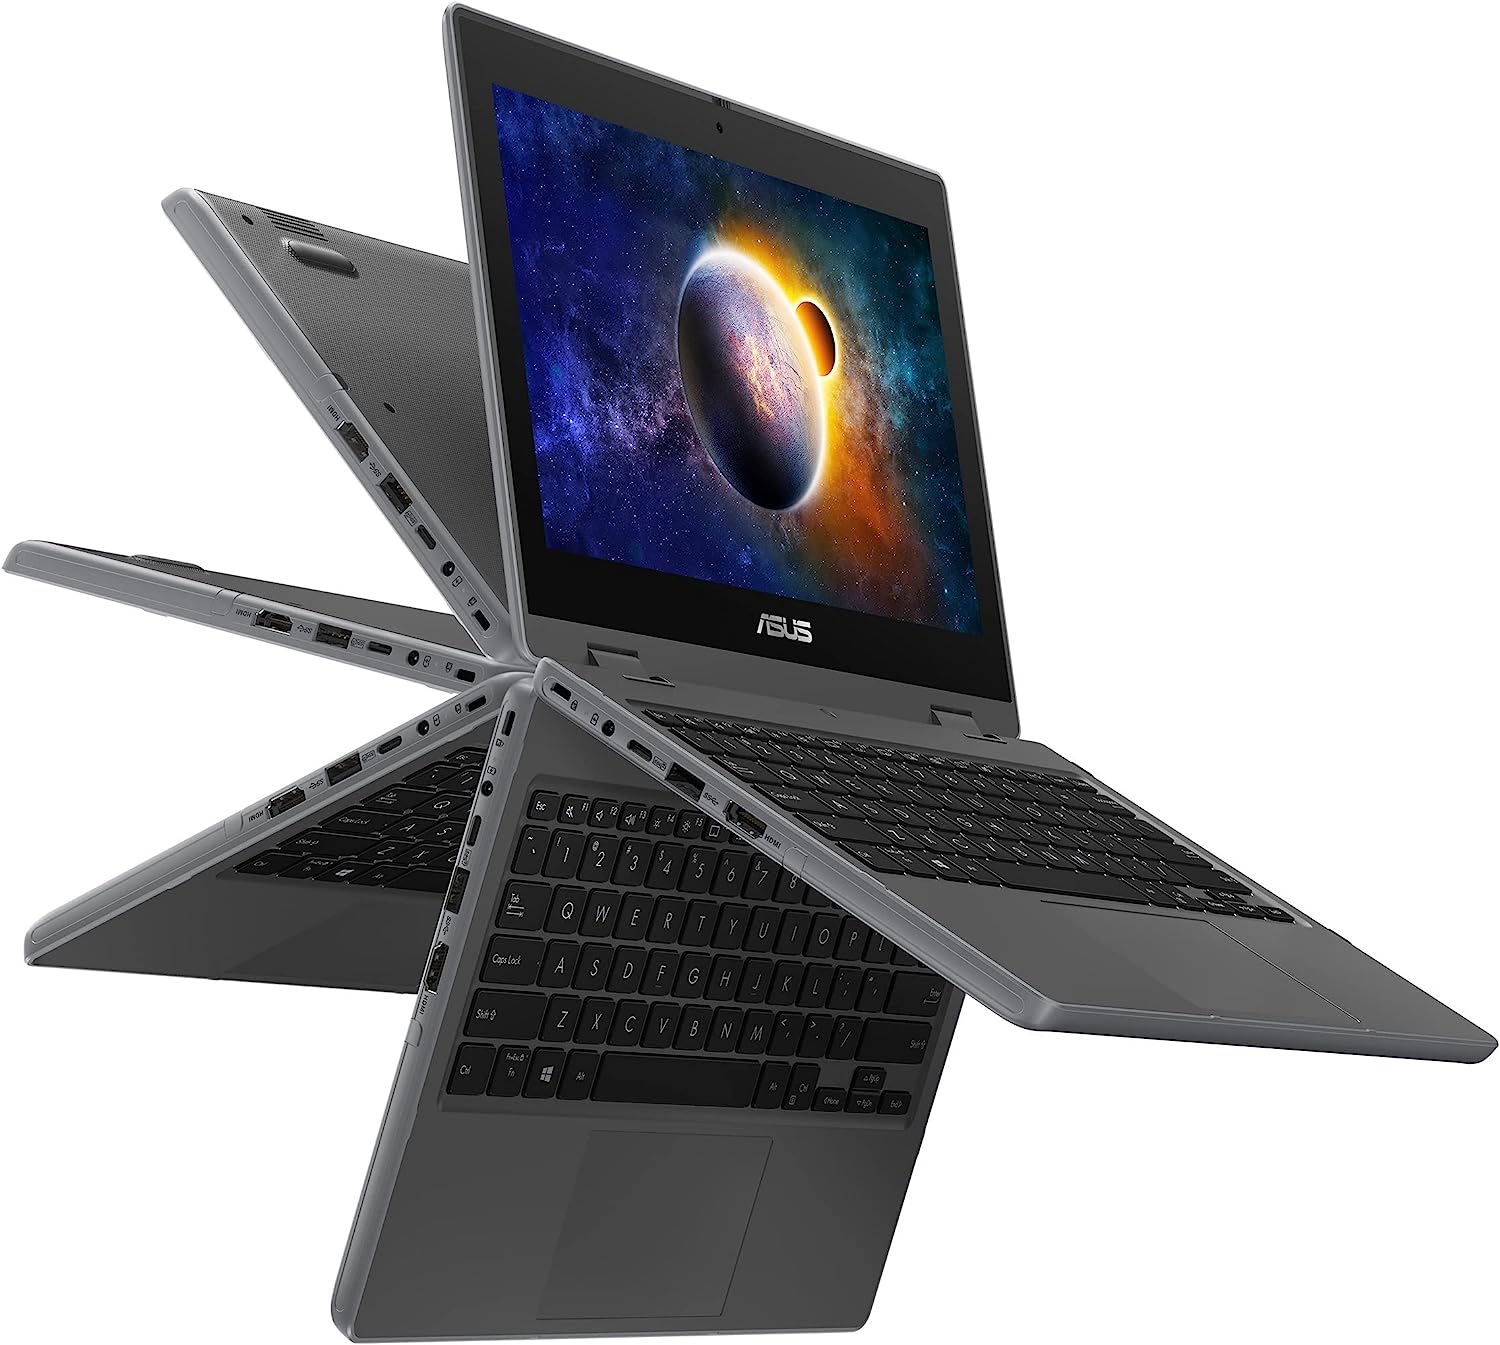 ASUS BR1100 Laptop, 11.6